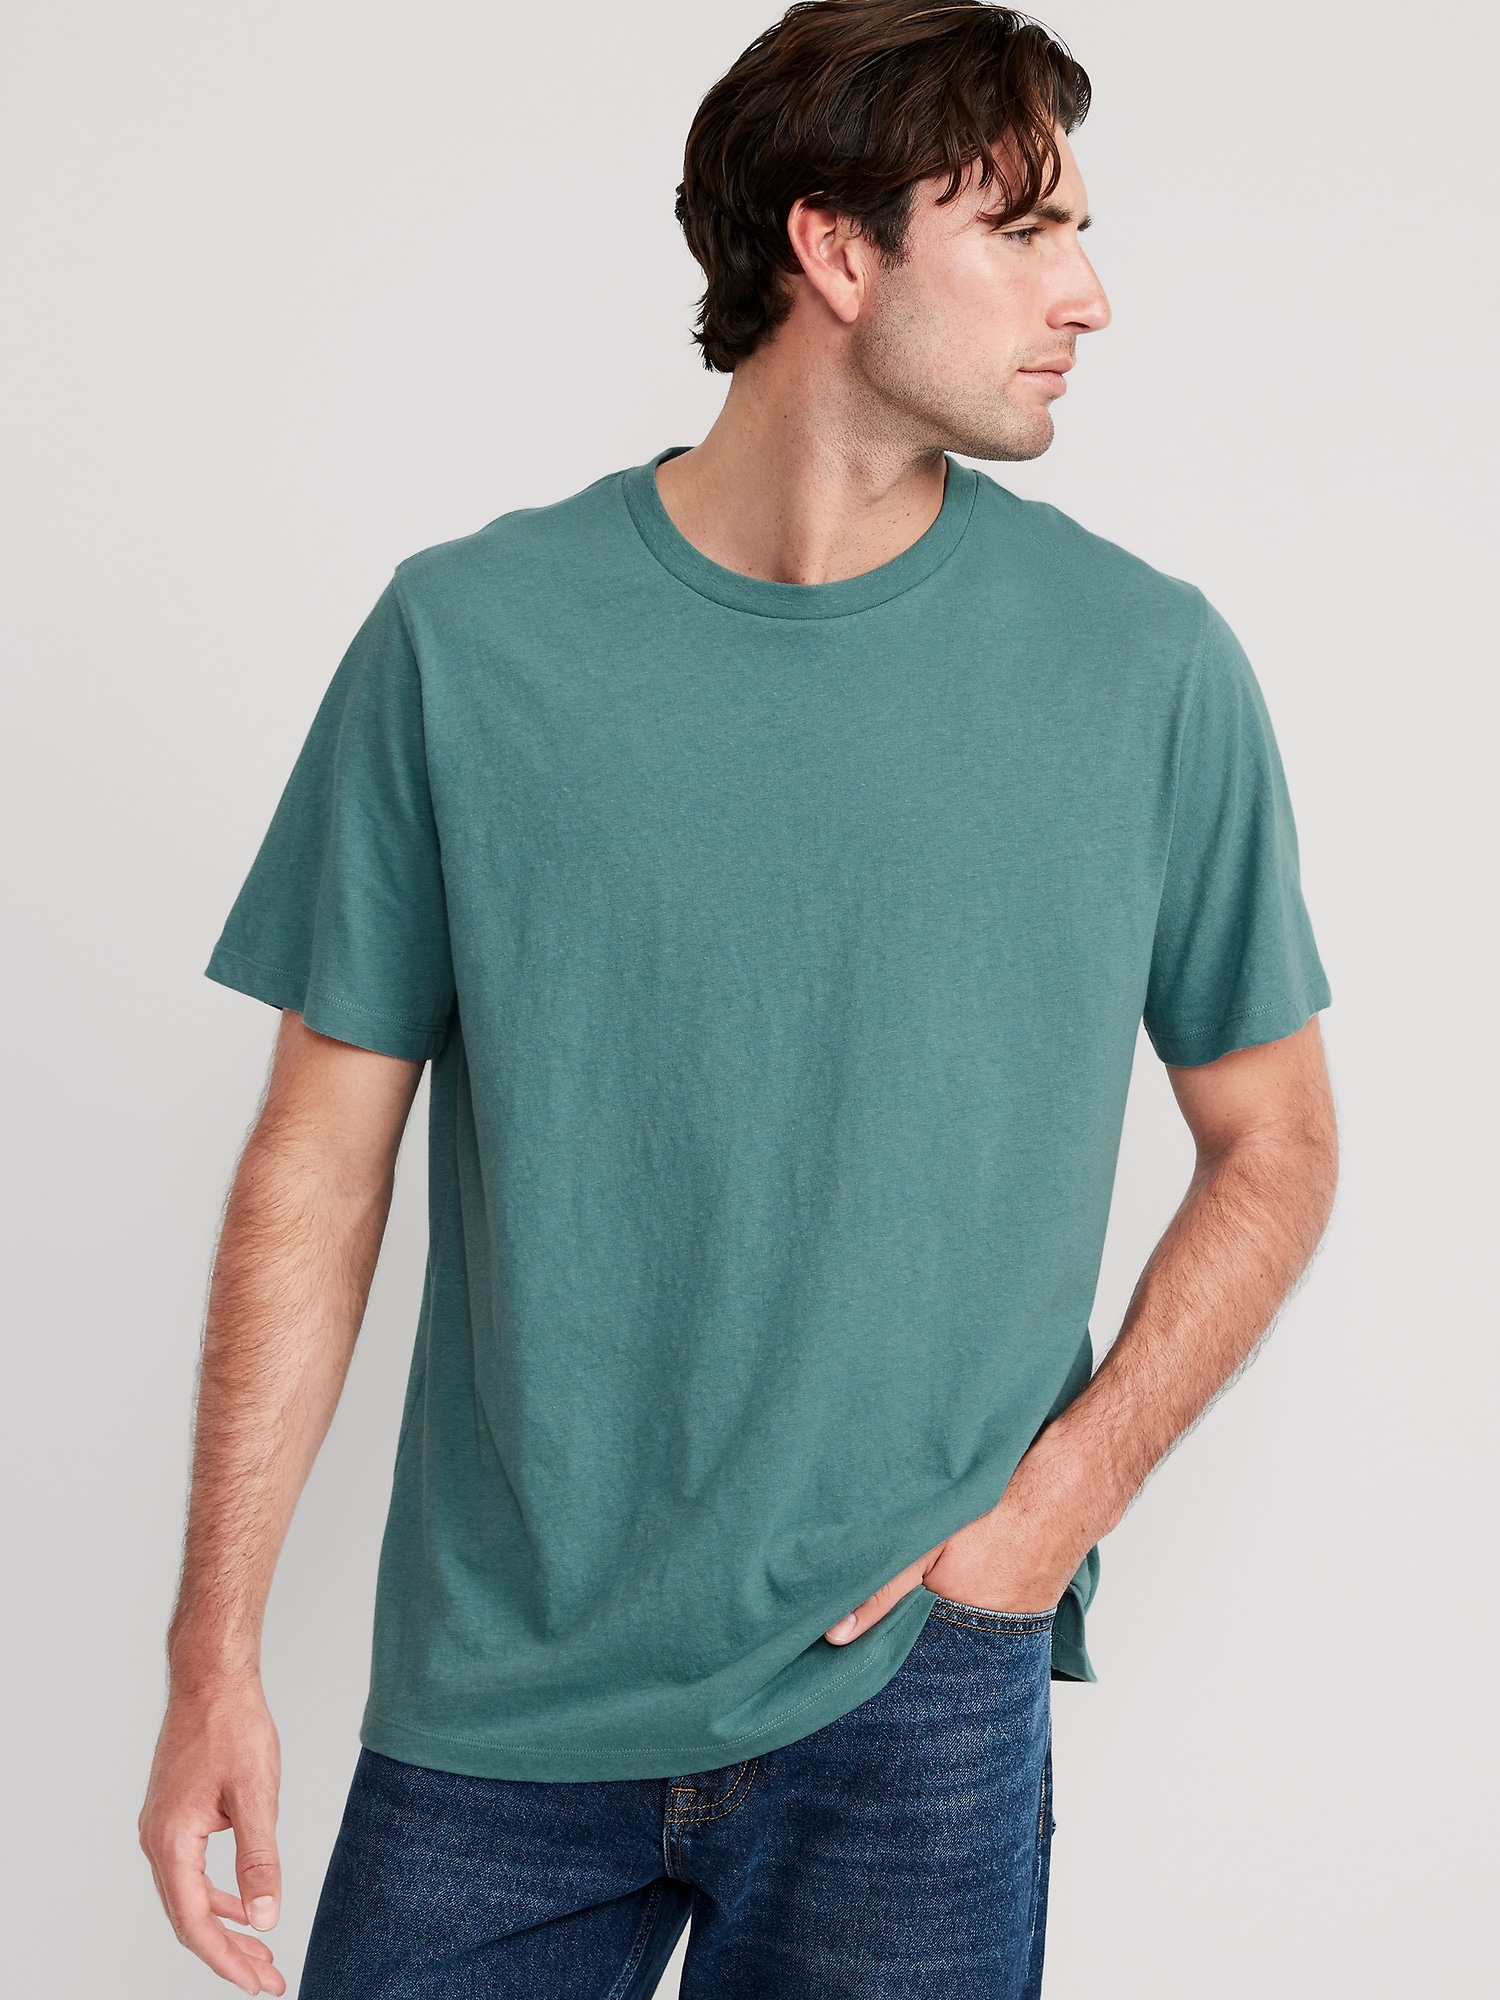 Old Navy Slub-Knit T-Shirt for Men green. 1